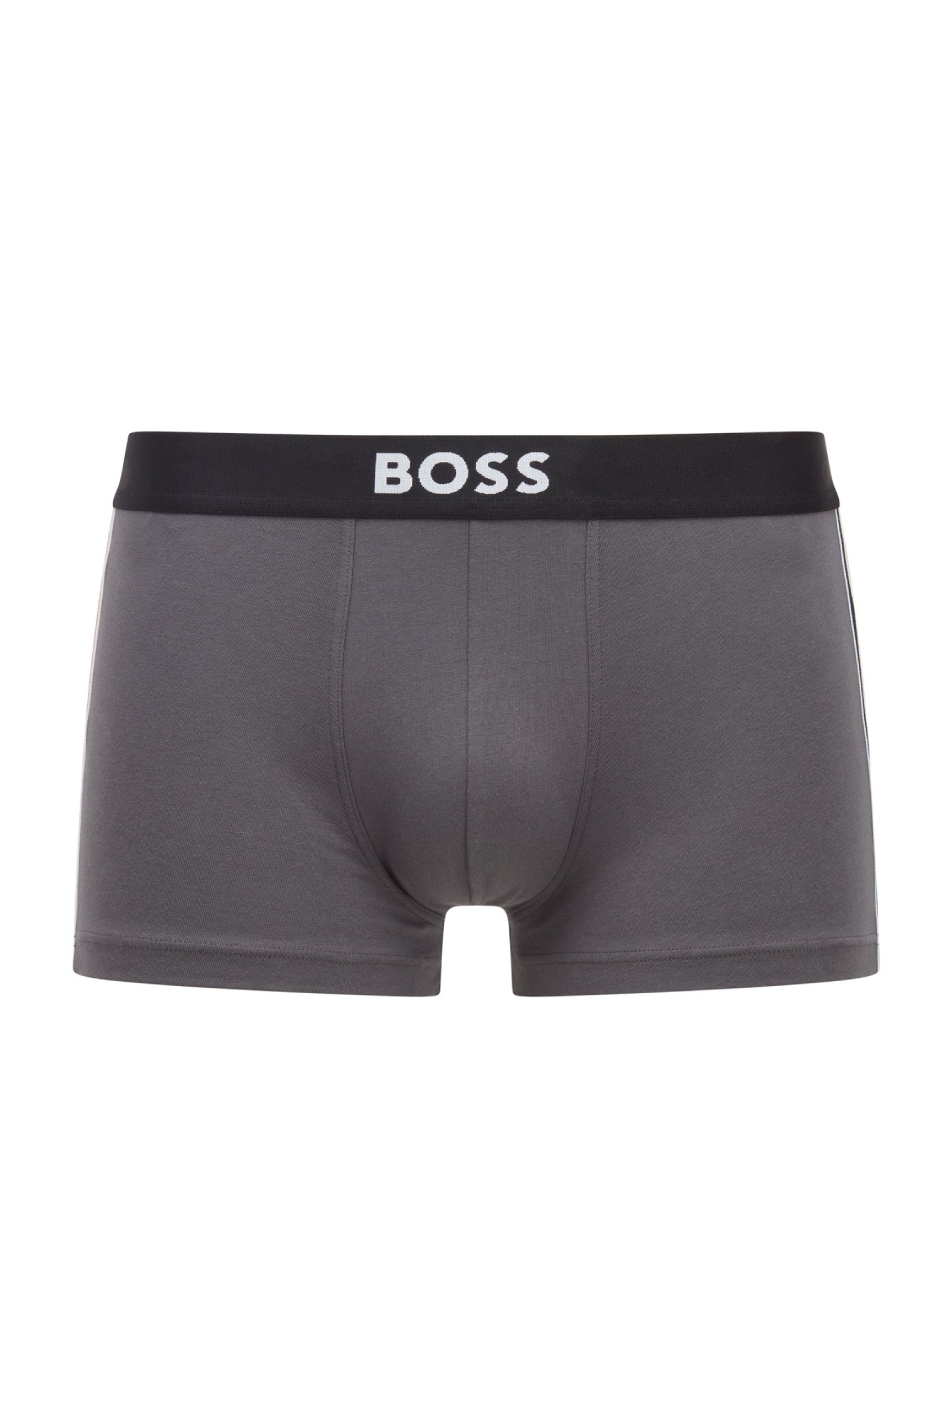 Boss Men's Essential Trunk